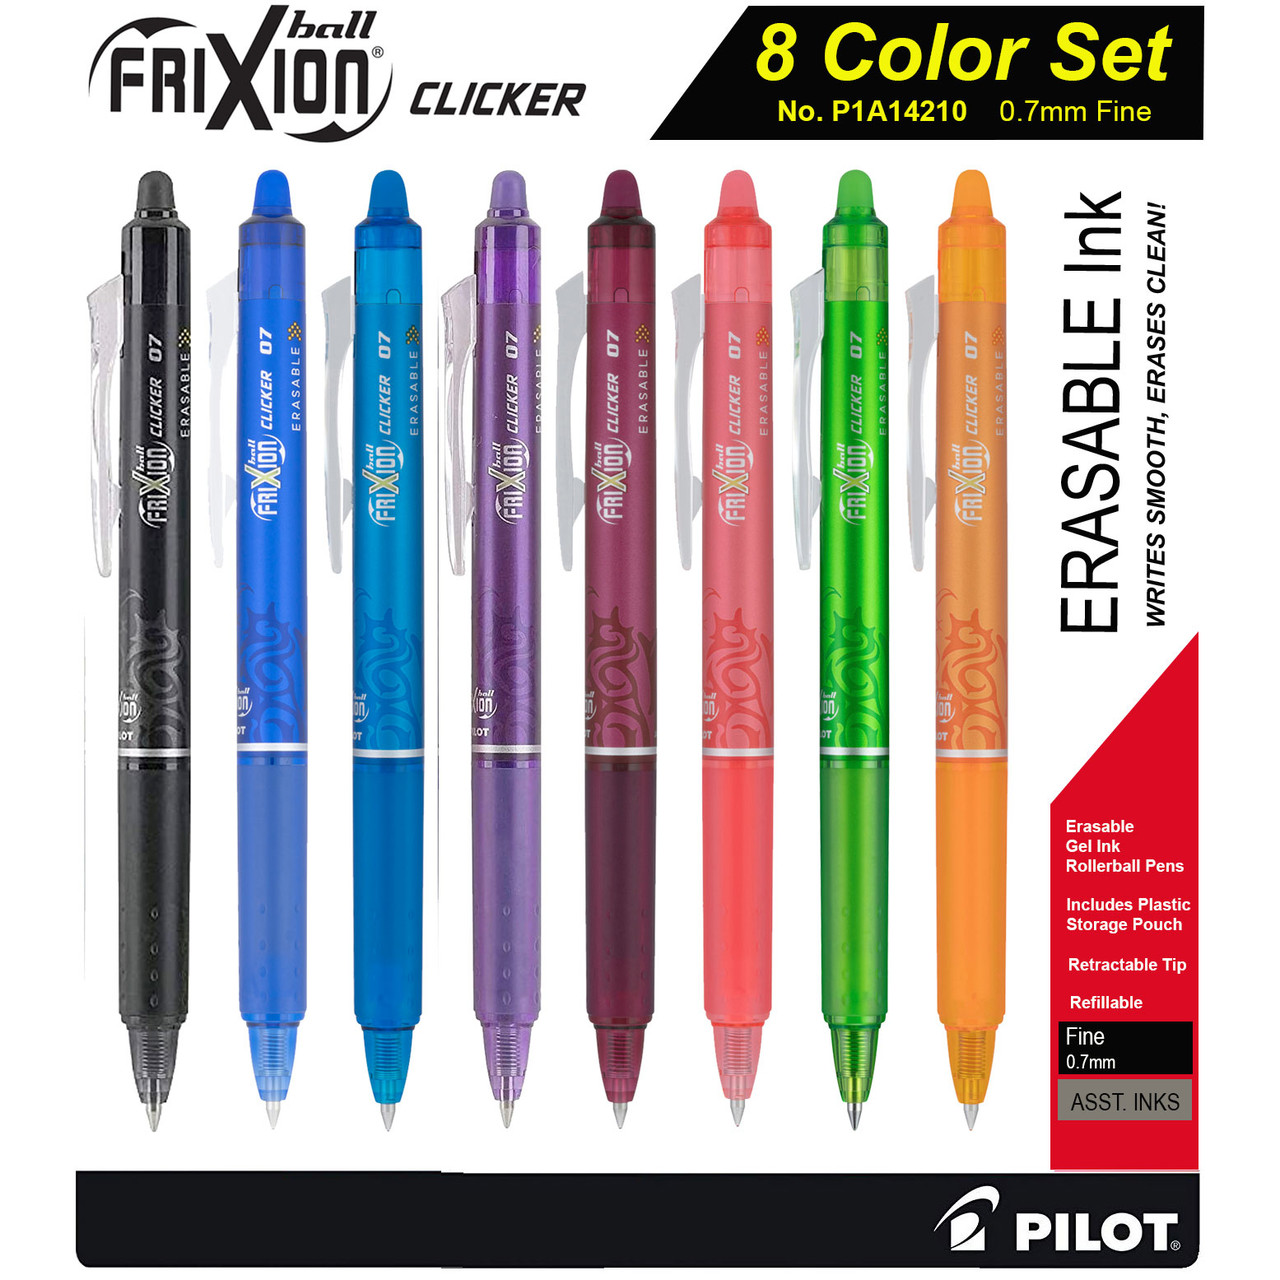 Sucio Fuera de plazo Detector Pilot 14210 FriXion Clicker 07, 0.7mm Fine Erasable Gel Ink Pens, 8 Color  Set | Nordisco.com